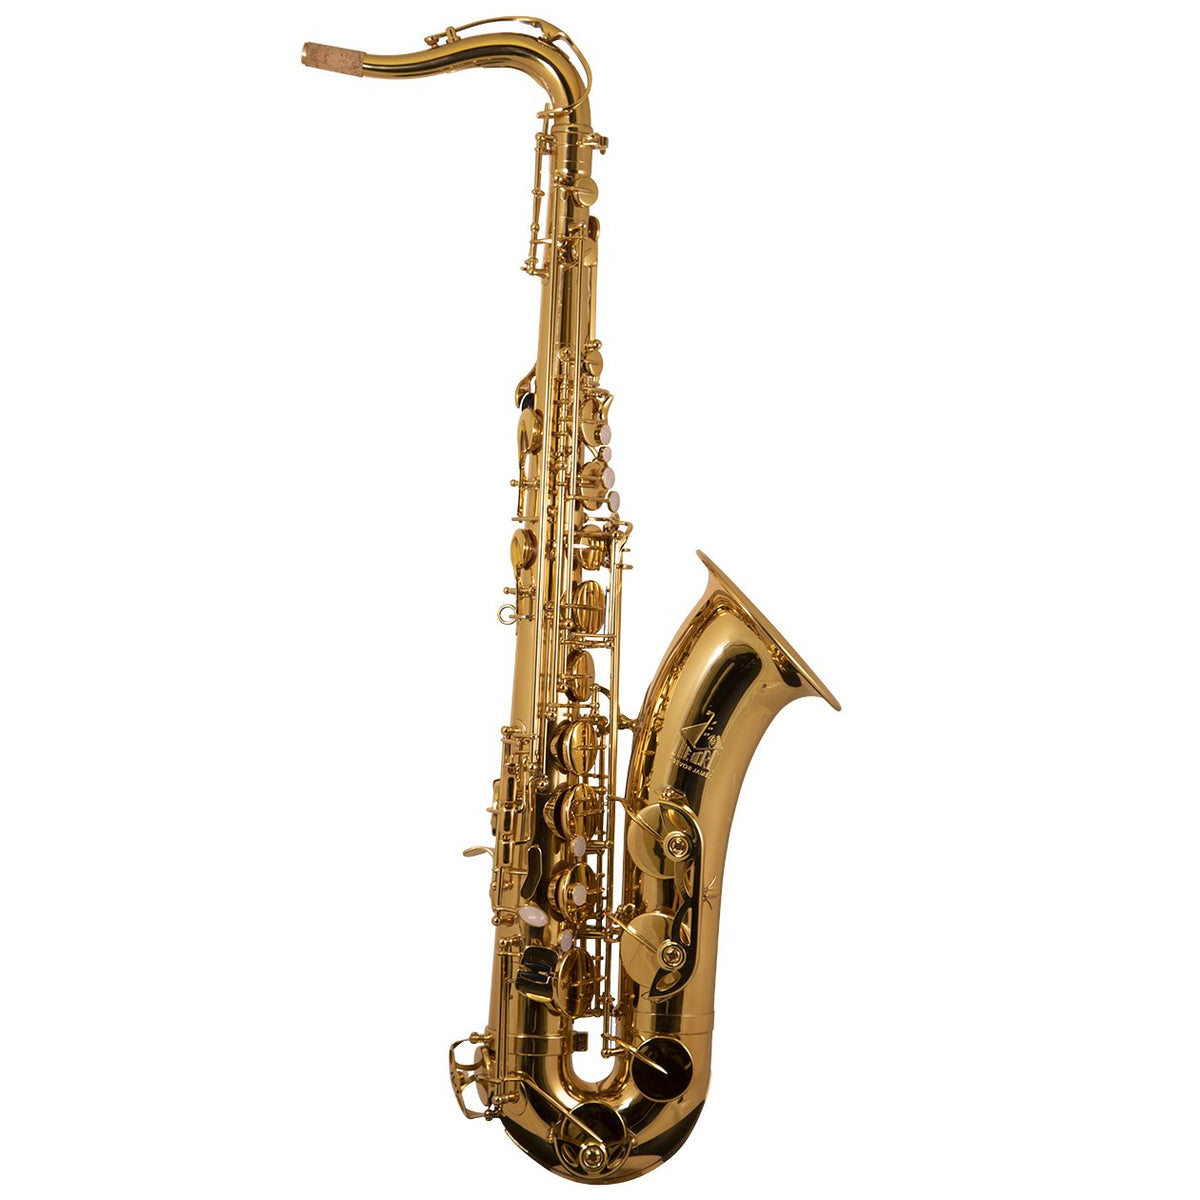 Trevor James - &quot;The Horn&quot; Tenor Saxophone-Saxophone-Trevor James-Music Elements